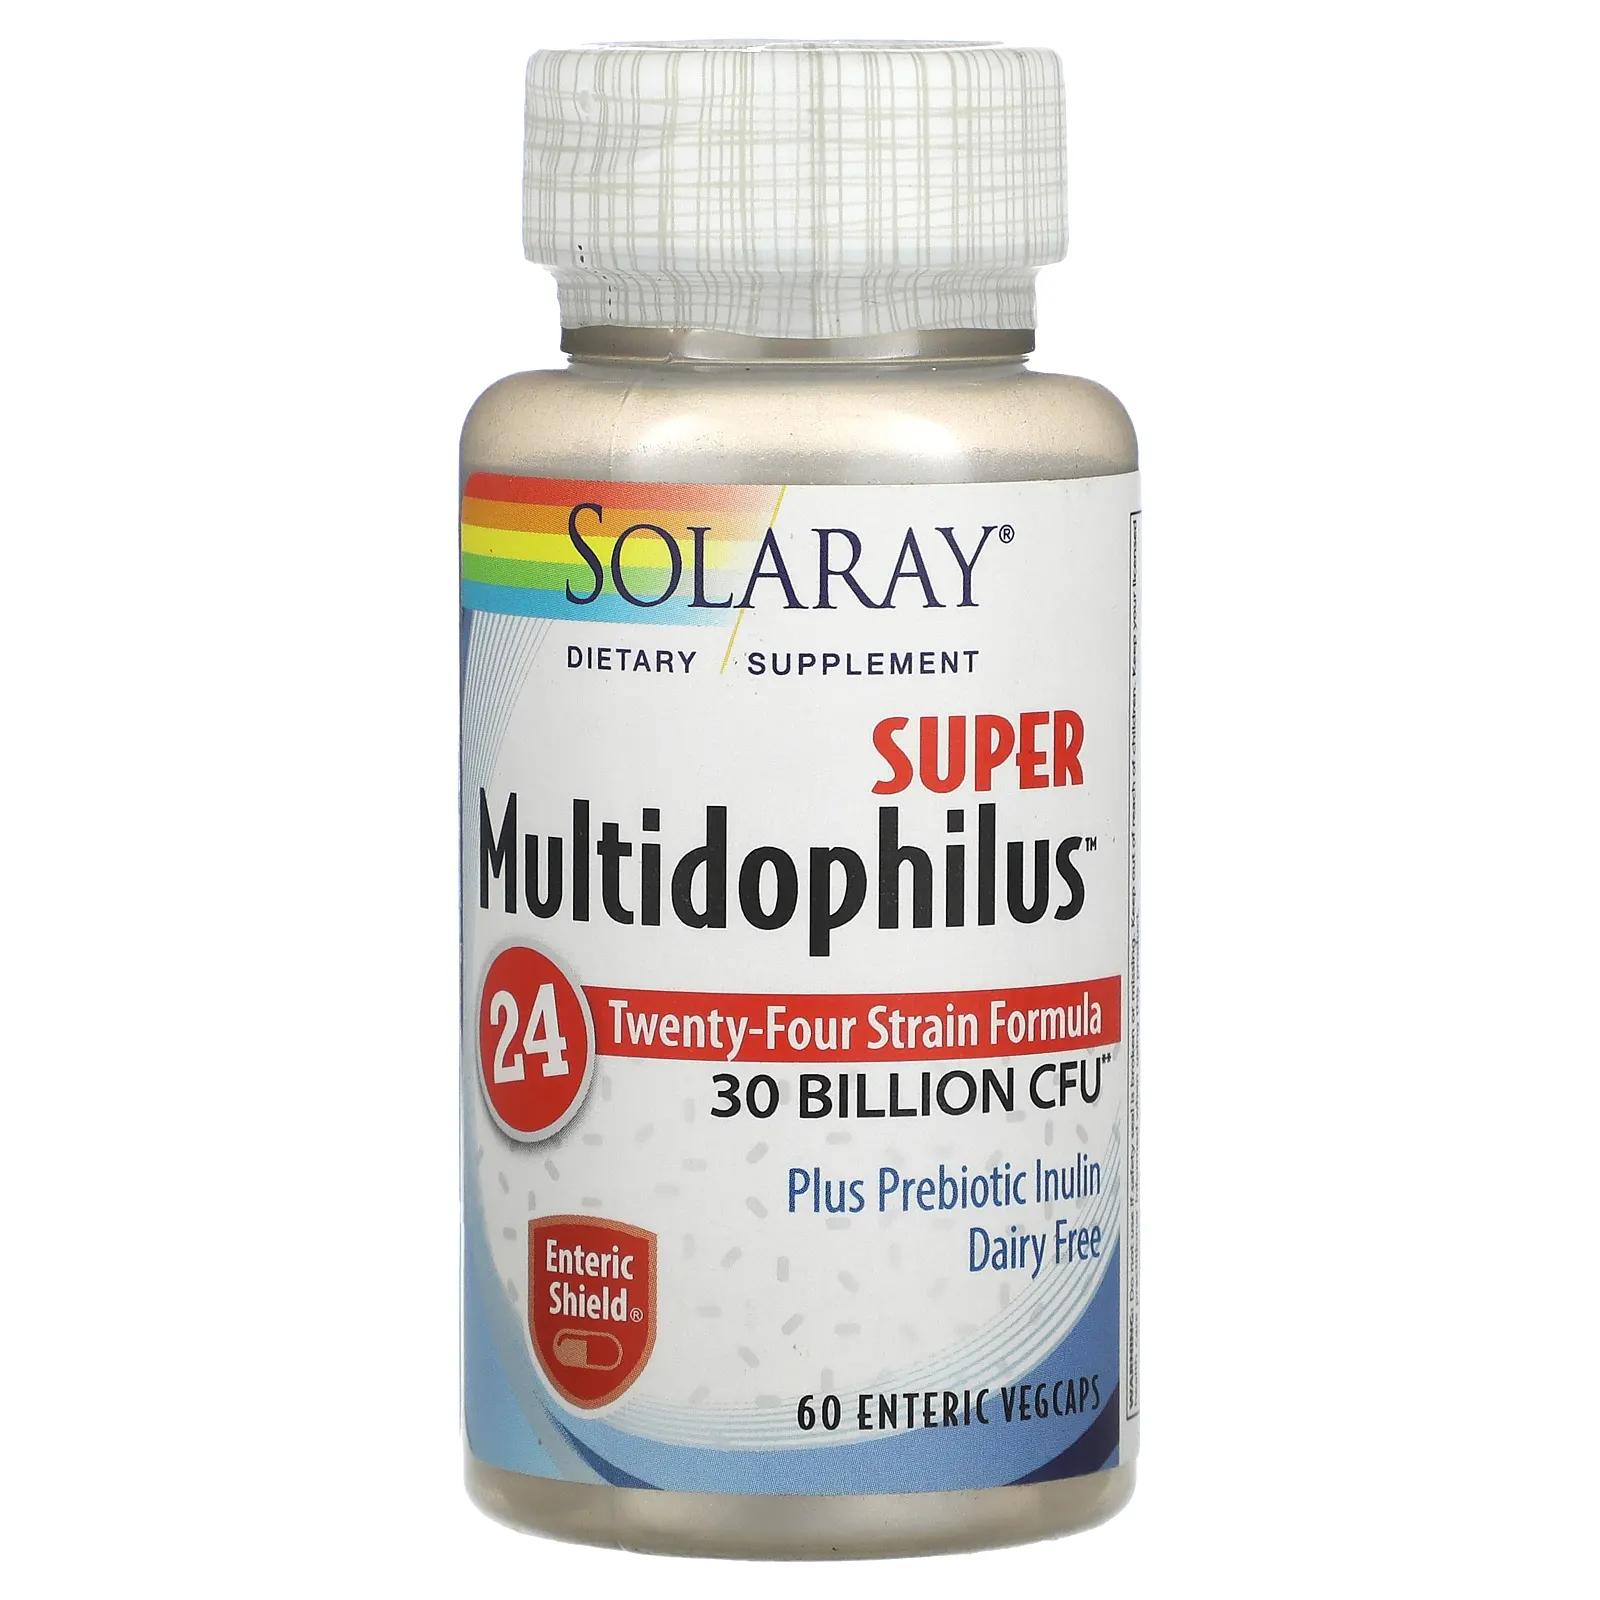 solaray multidophilus probiotic пробиотик 20 млрд кое 100 вегетарианских капсул vegcaps Solaray Super Multidophilus 30 миллиардов КОЕ 60 вегетарианских капсул с покрытием